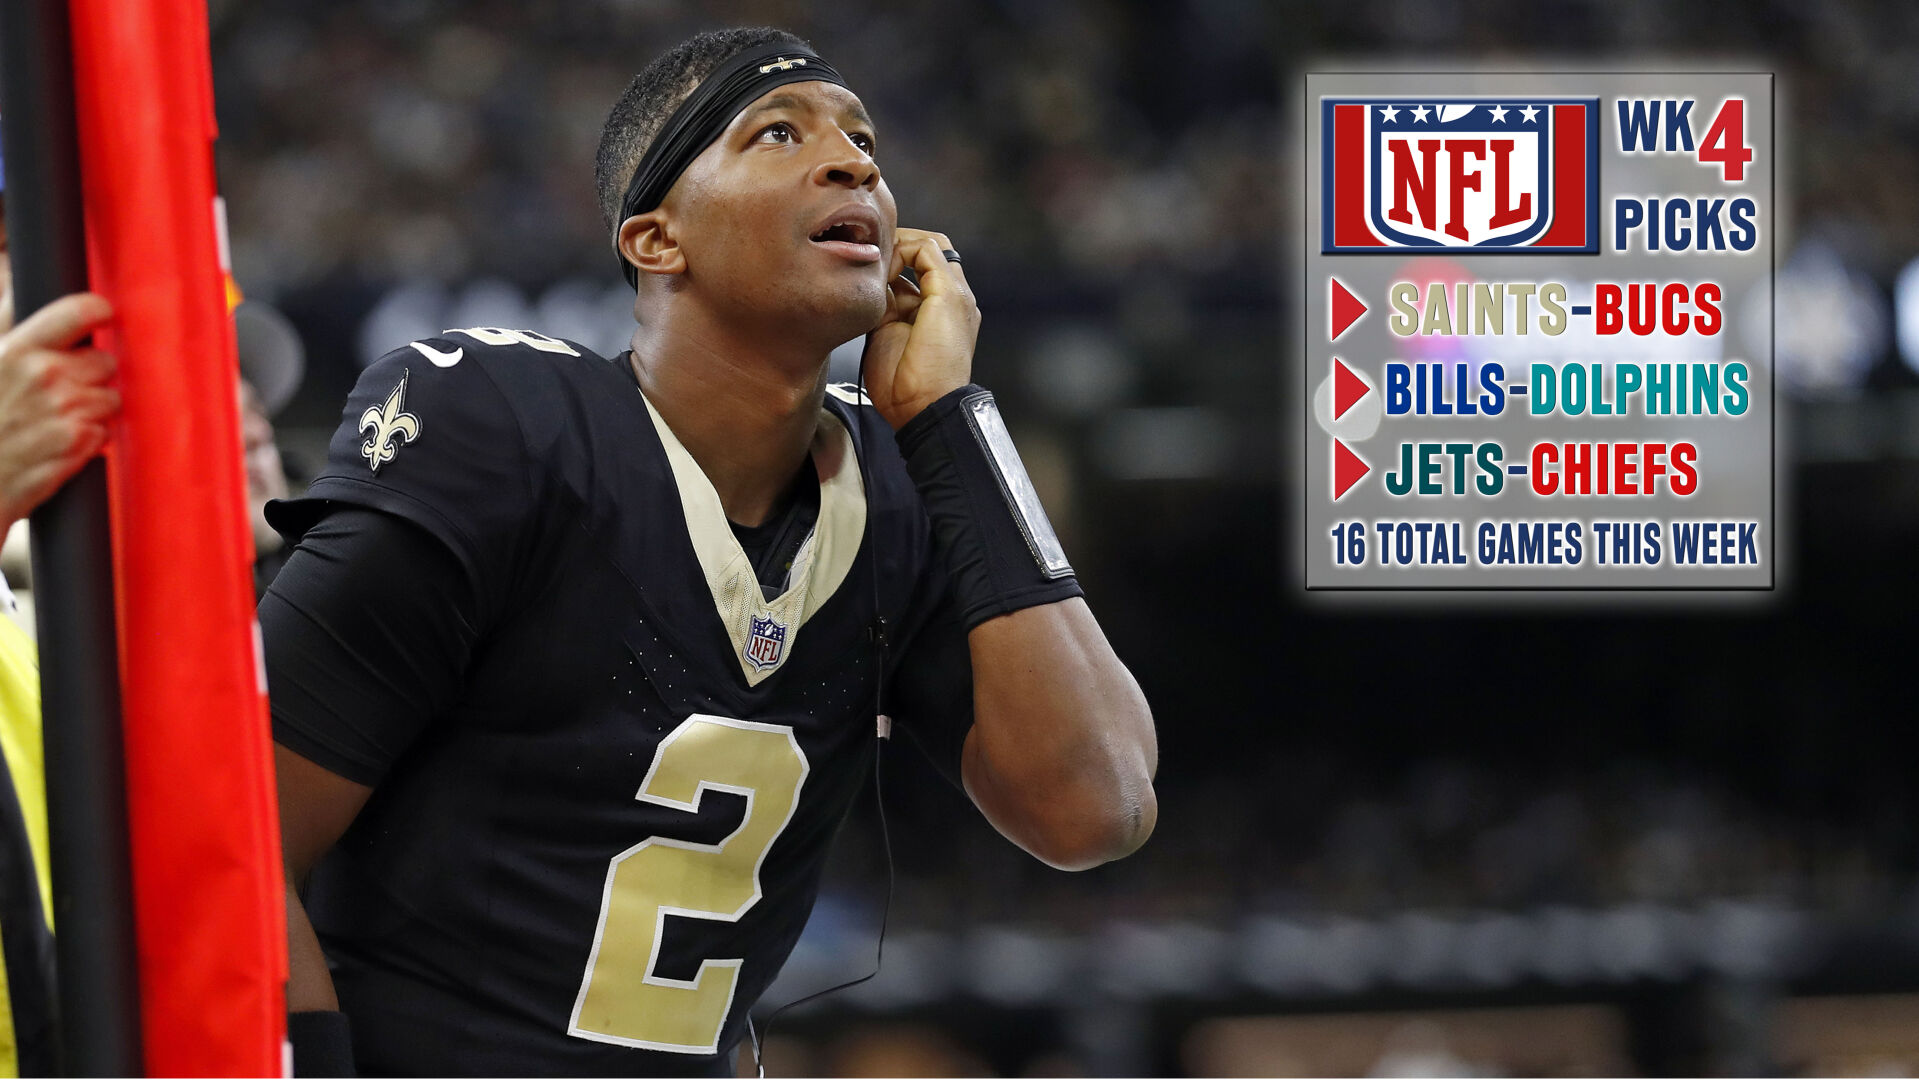 NFL Week 4 Picks: Bills-Dolphins, Lions-Packers top list | Sports